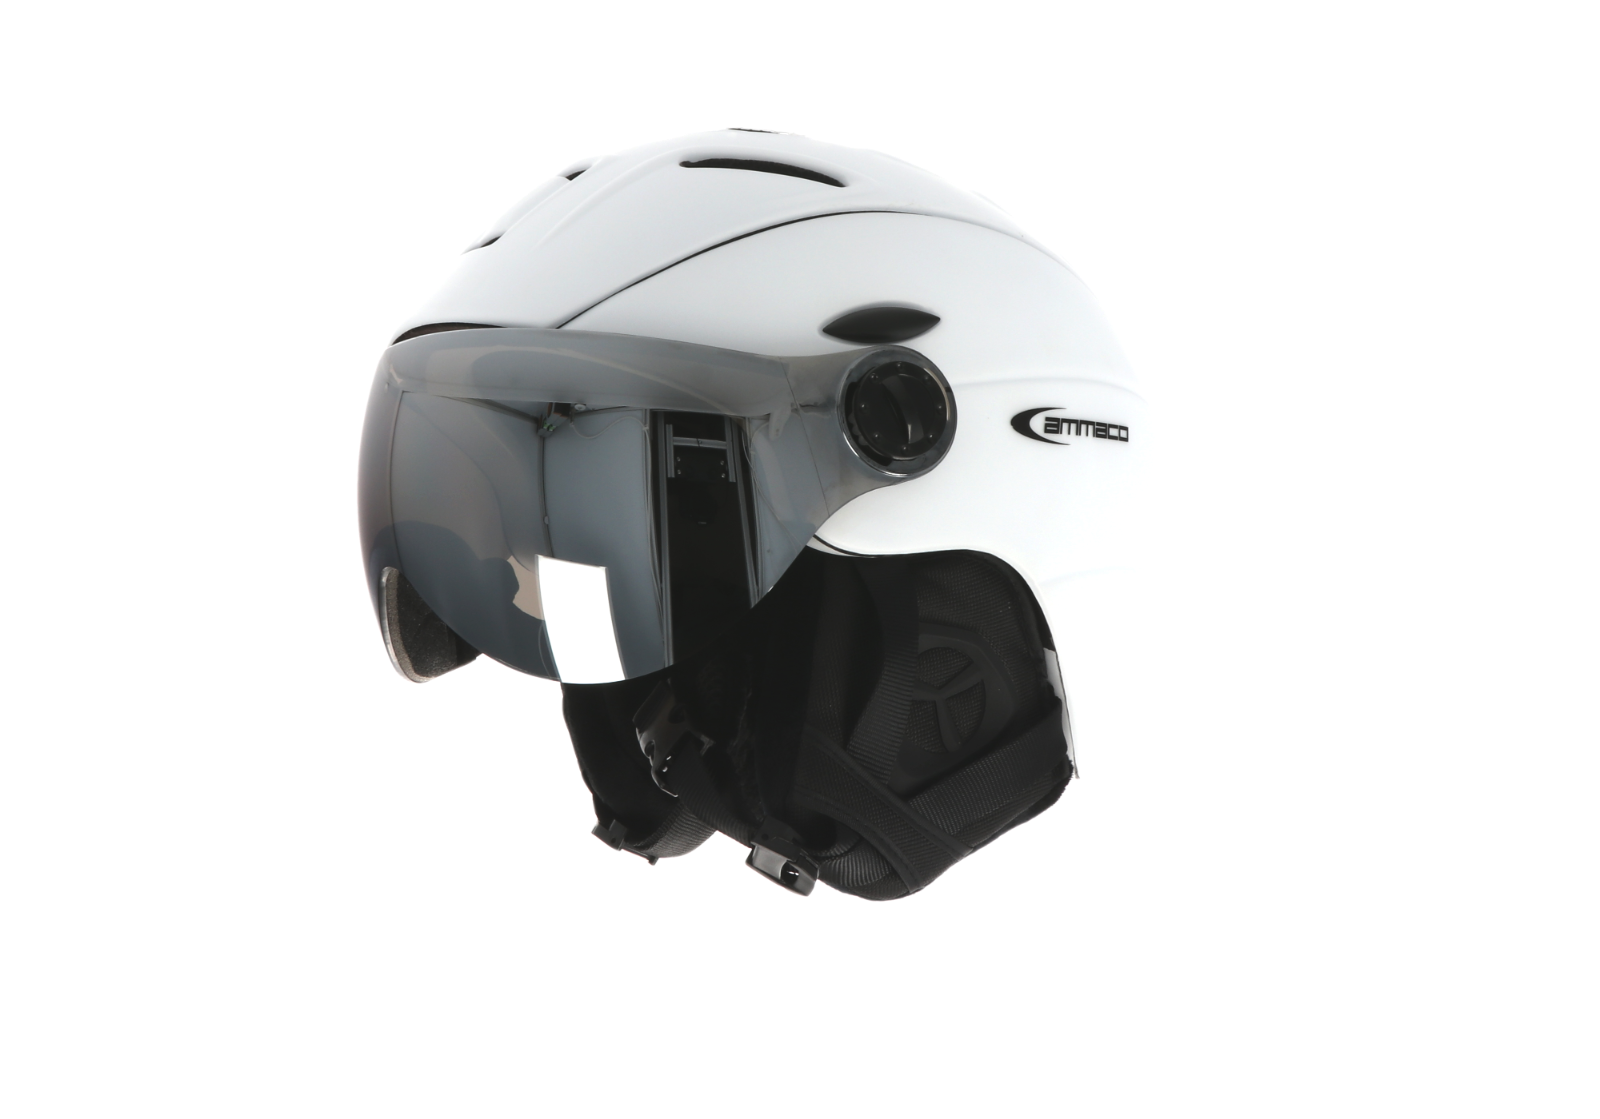 Ammaco 12 Vent Visor Ski Helmet White - Mirror Silver & Yellow Low Light Lens - Sportandleisure.com (6968171069594)